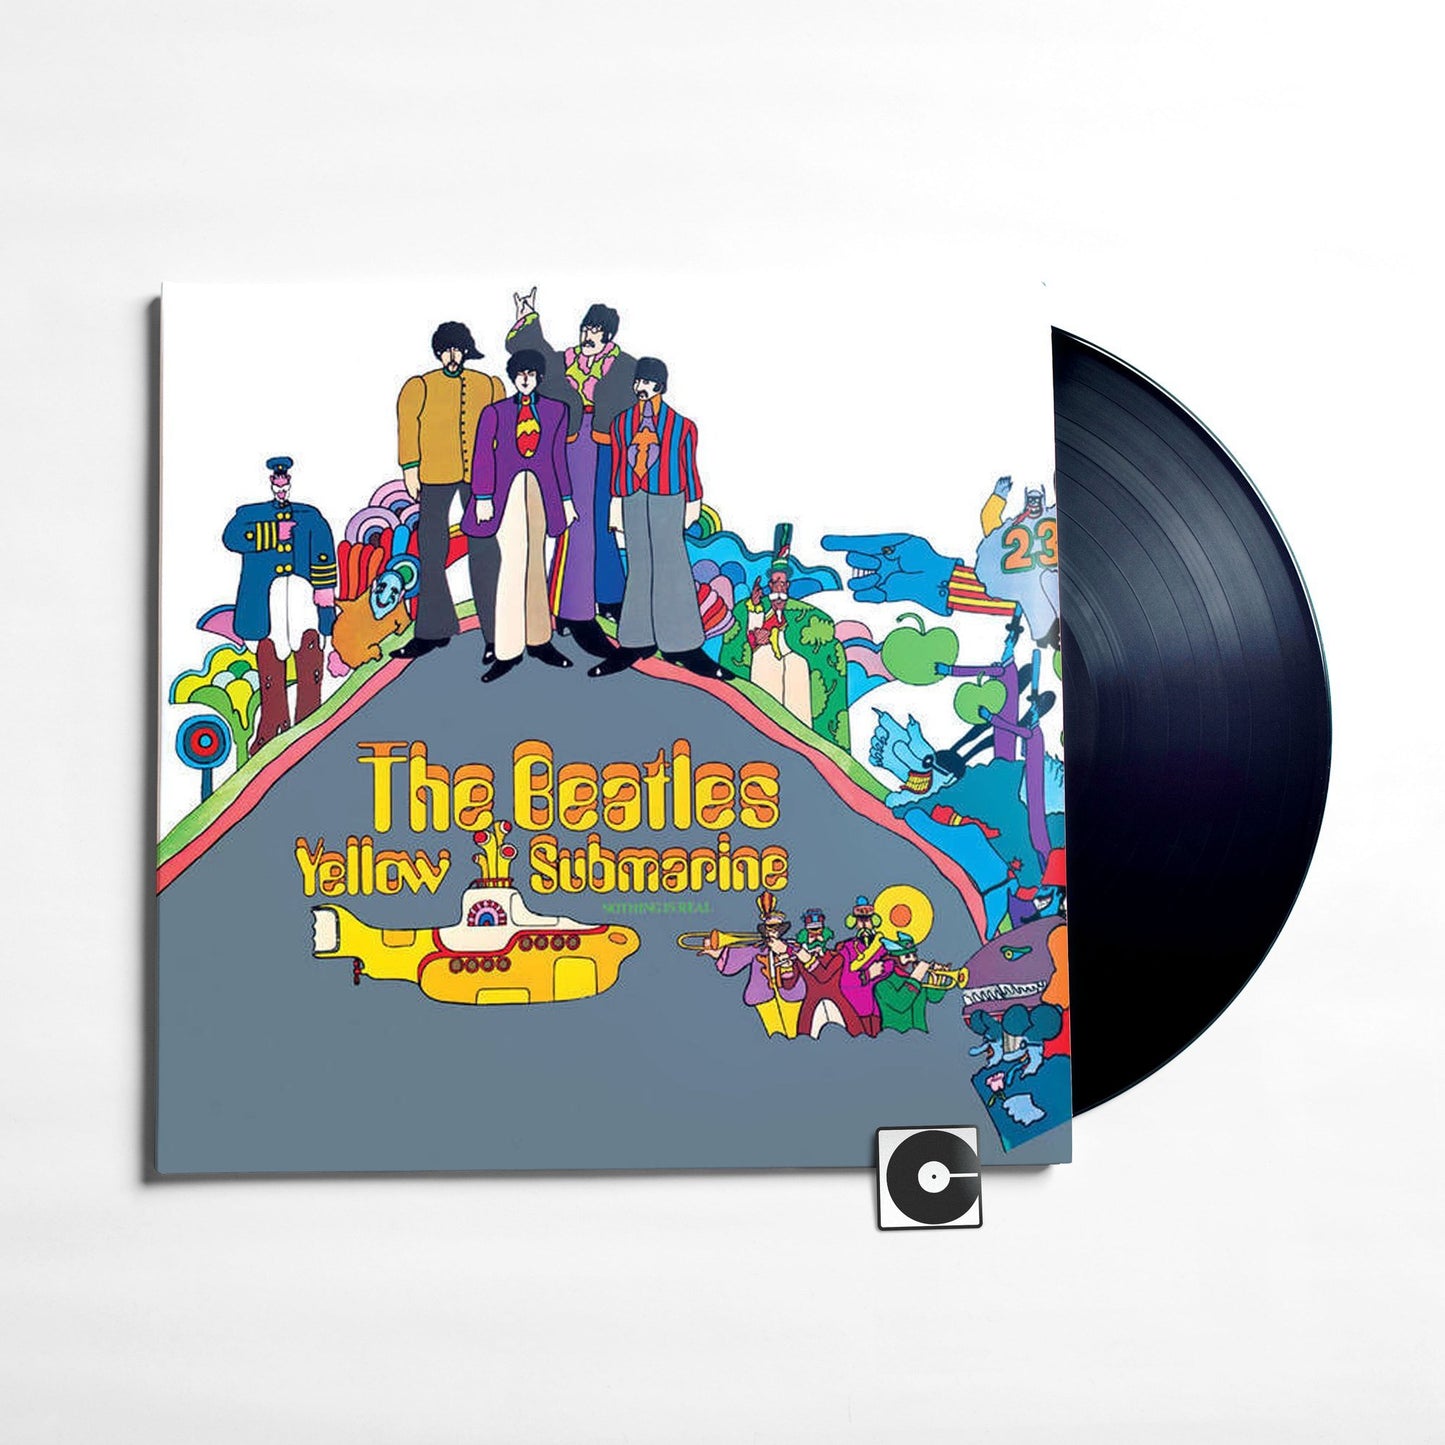 The Beatles - "Yellow Submarine" Stereo